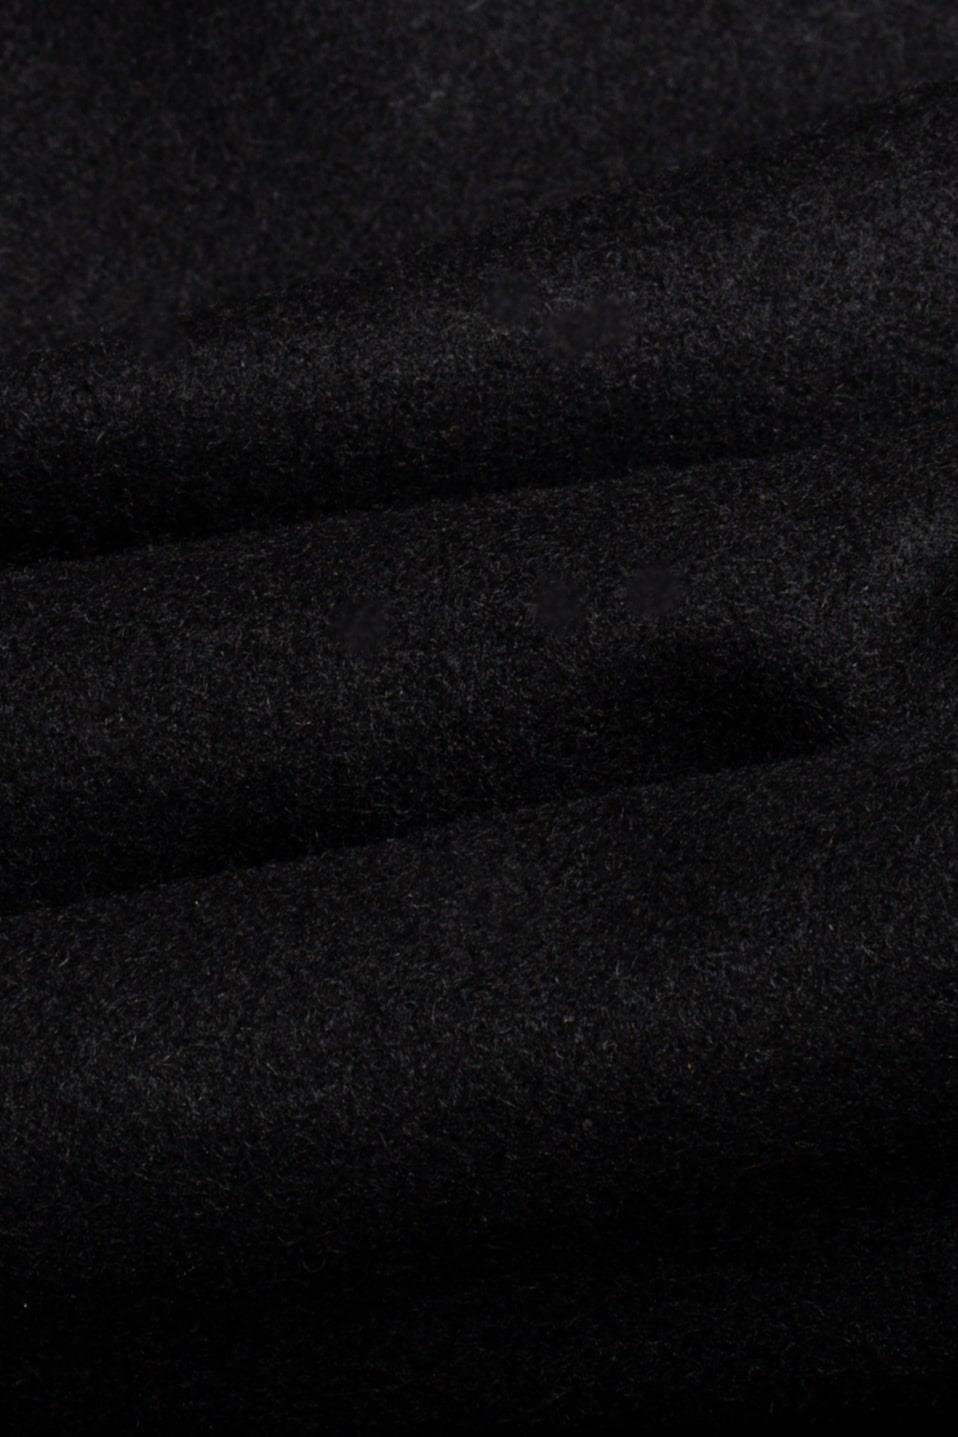 Nelson black long coat fabric swatch